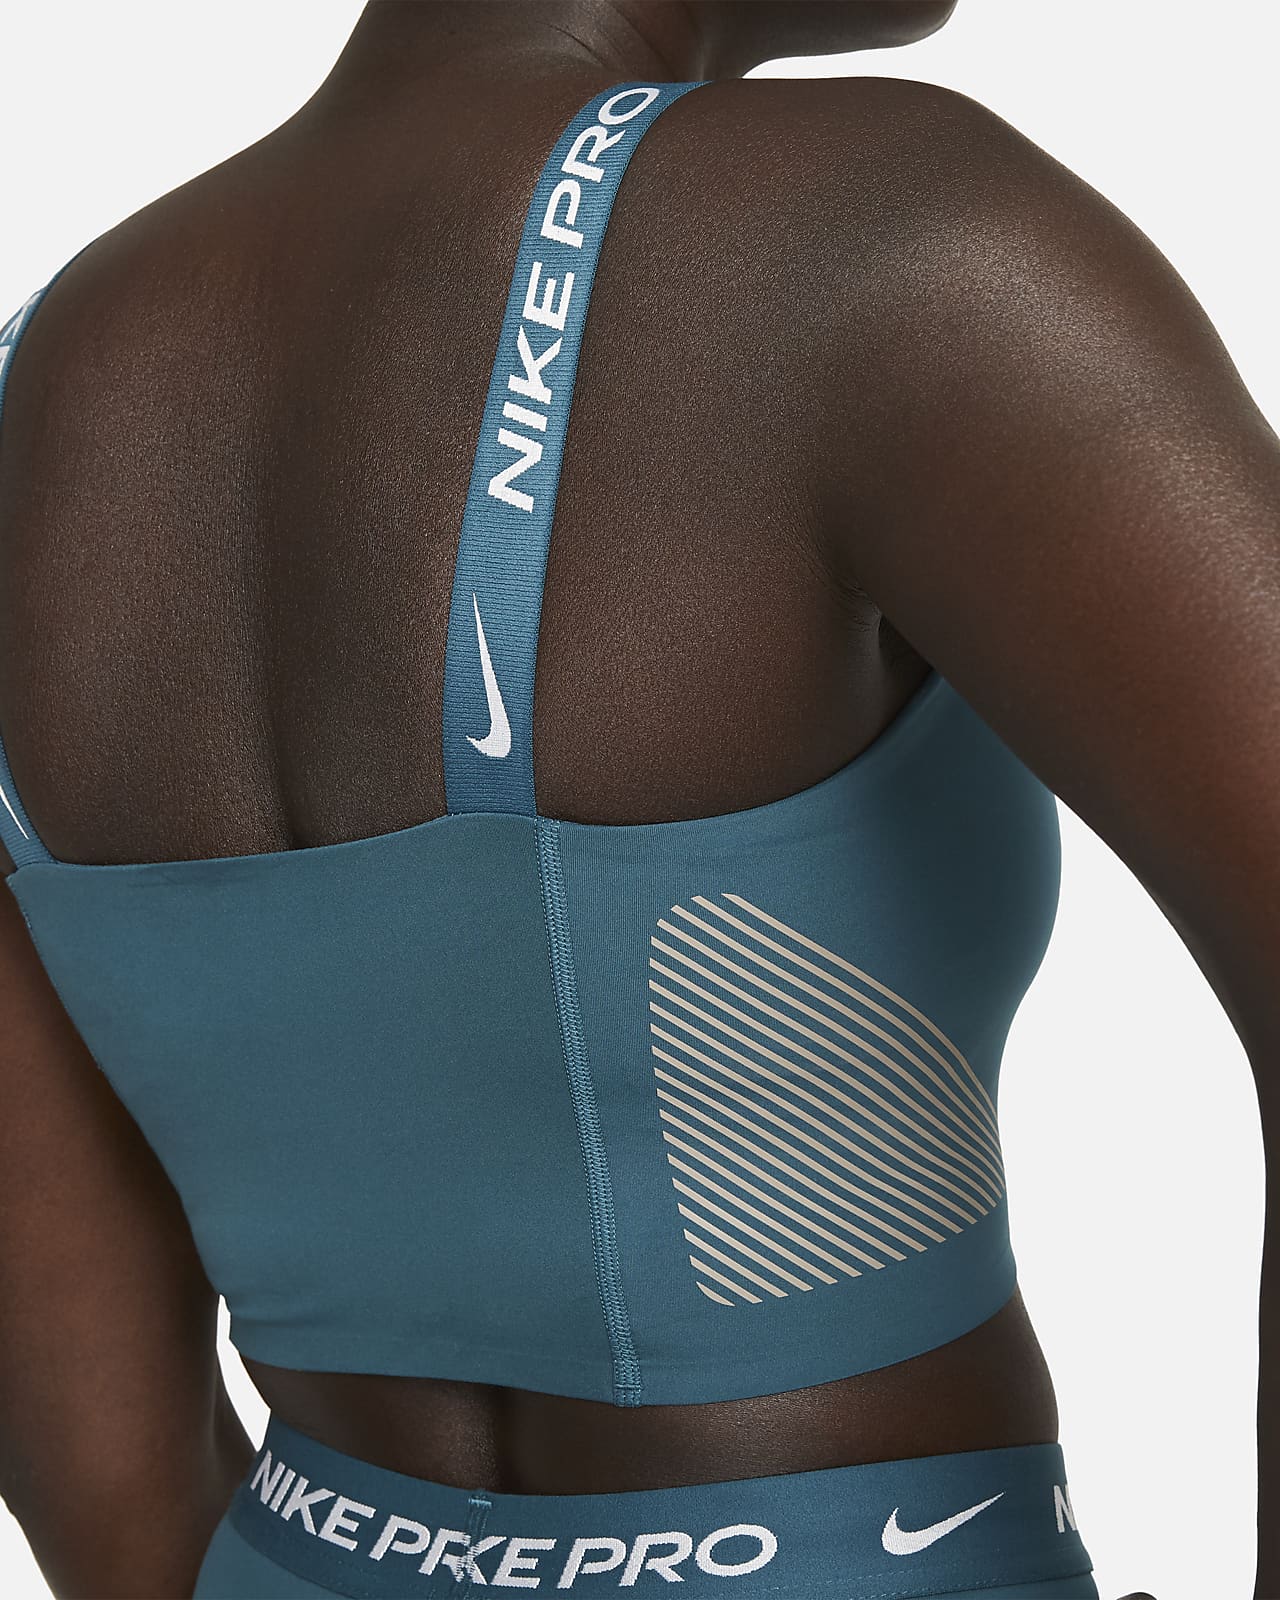 Nike Pro Dri-FIT Women's Shelf-Bra Cropped Tank - ShopStyle Activewear Tops